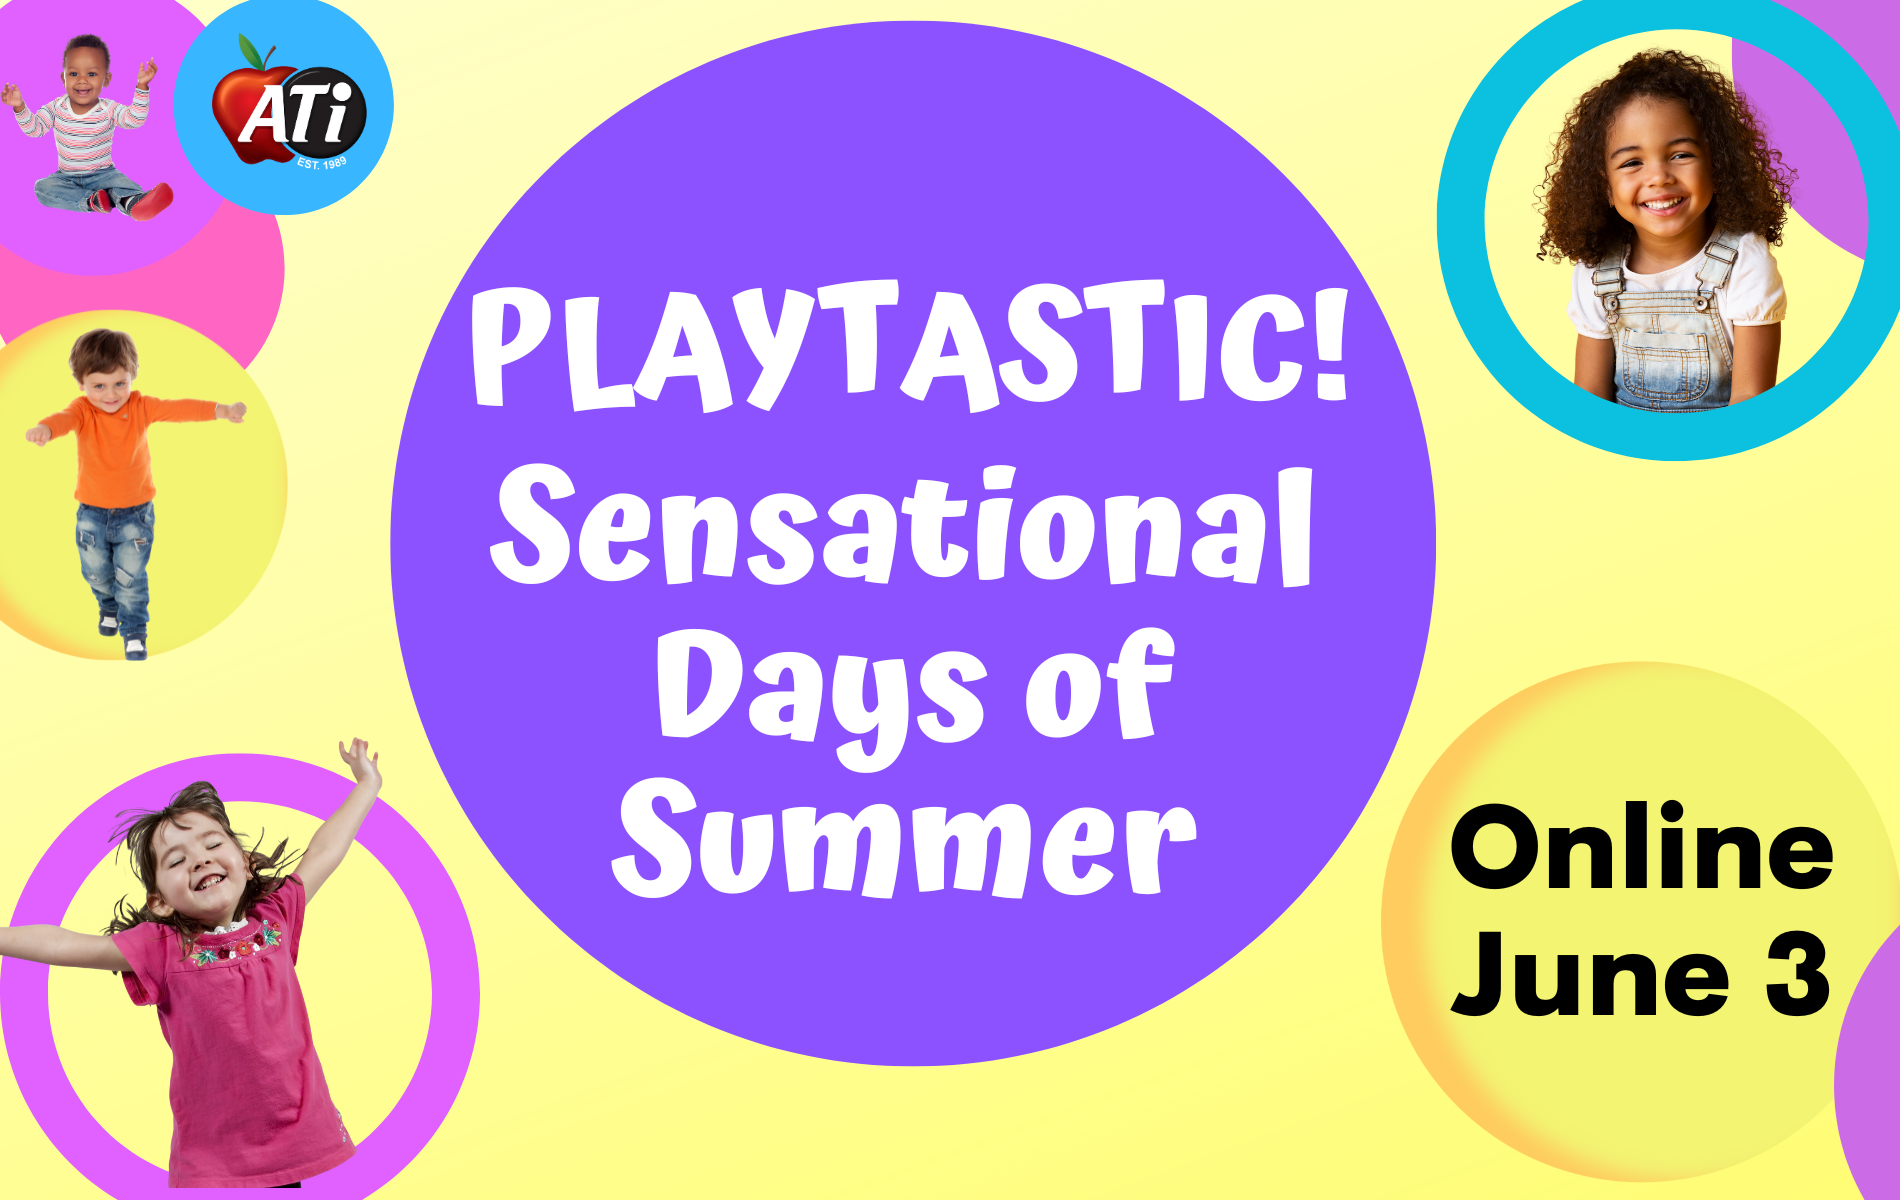 Playtastic! Sensational Days of Summer - Online - The Appelbaum